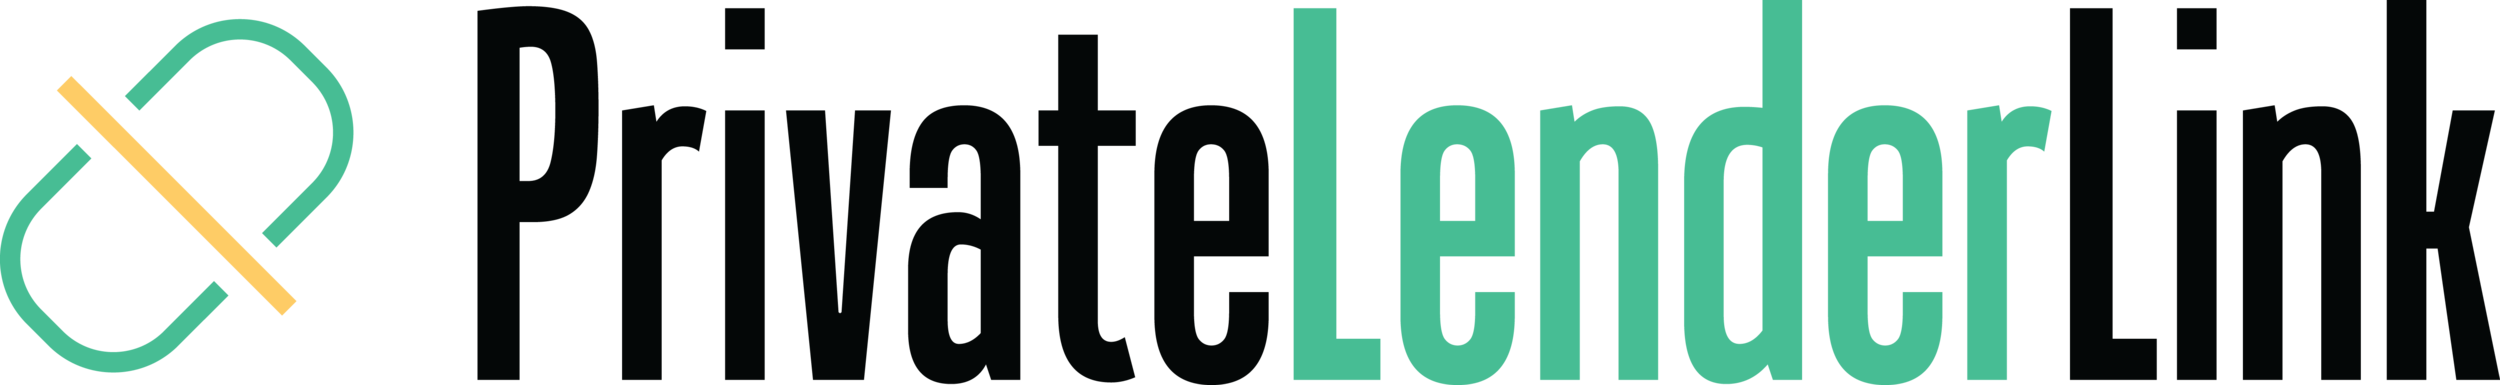 PLL-Logo-4C-LgtBG-large.png